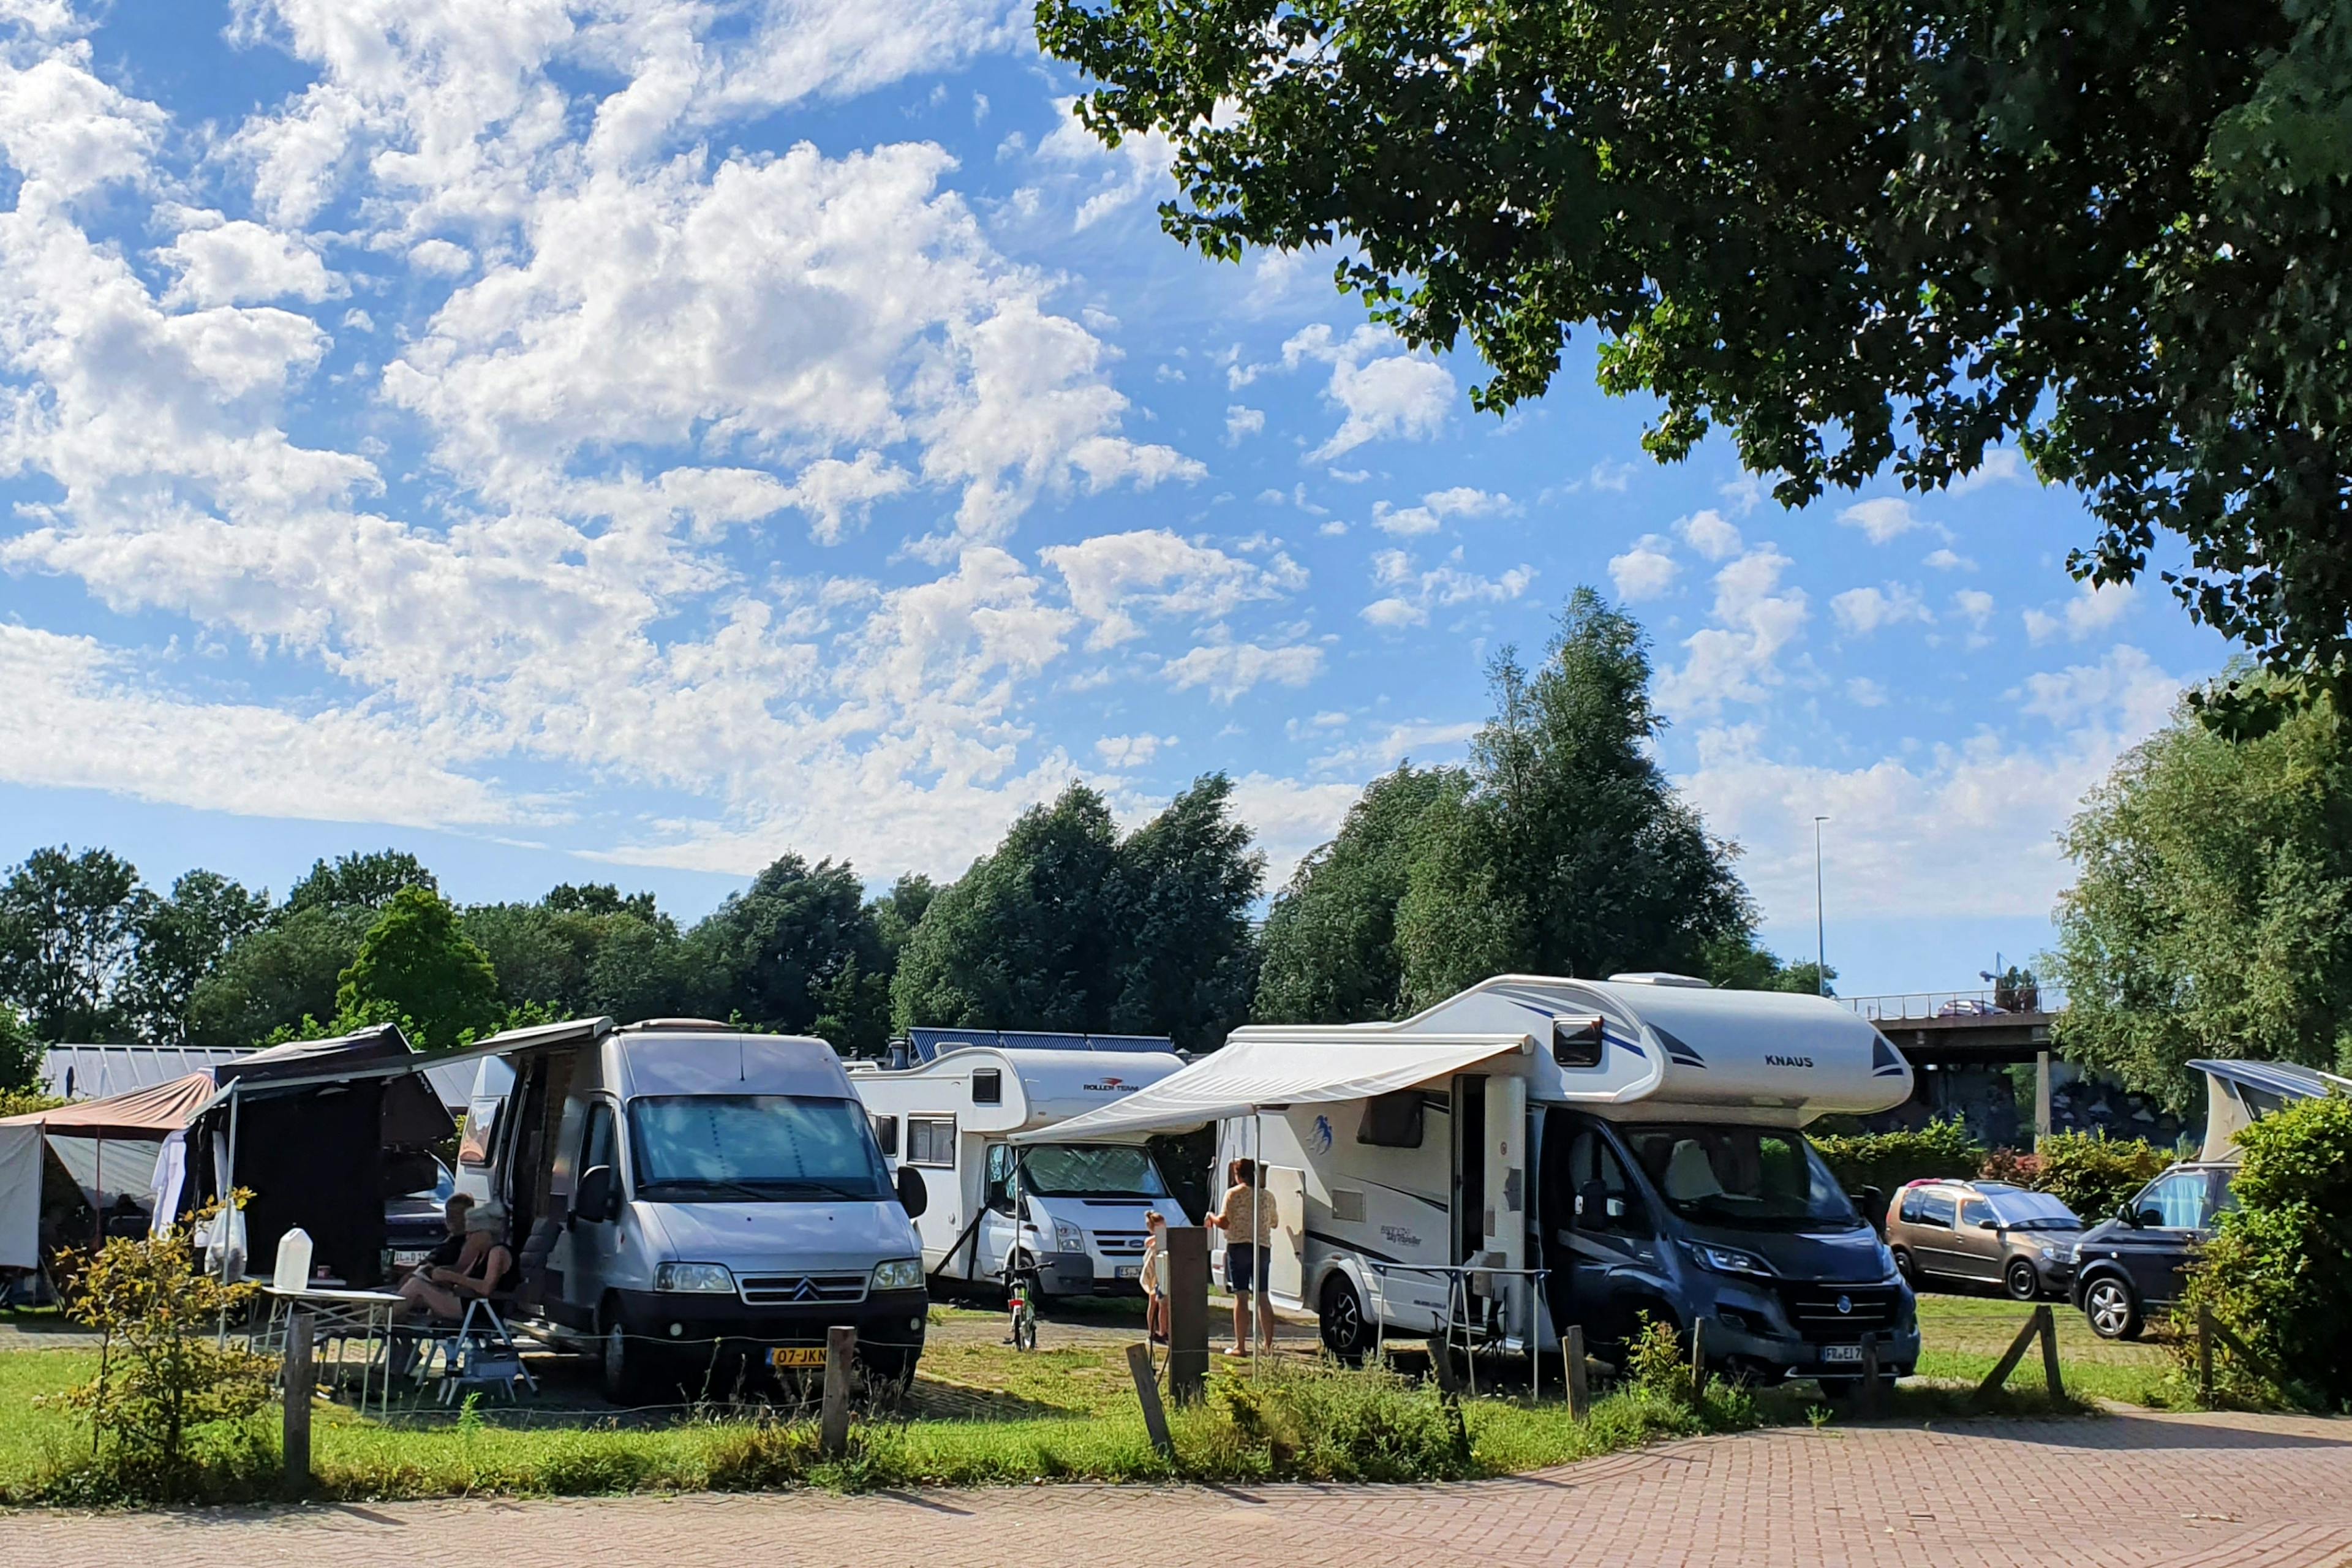 Camping Zeeburg Amsterdam